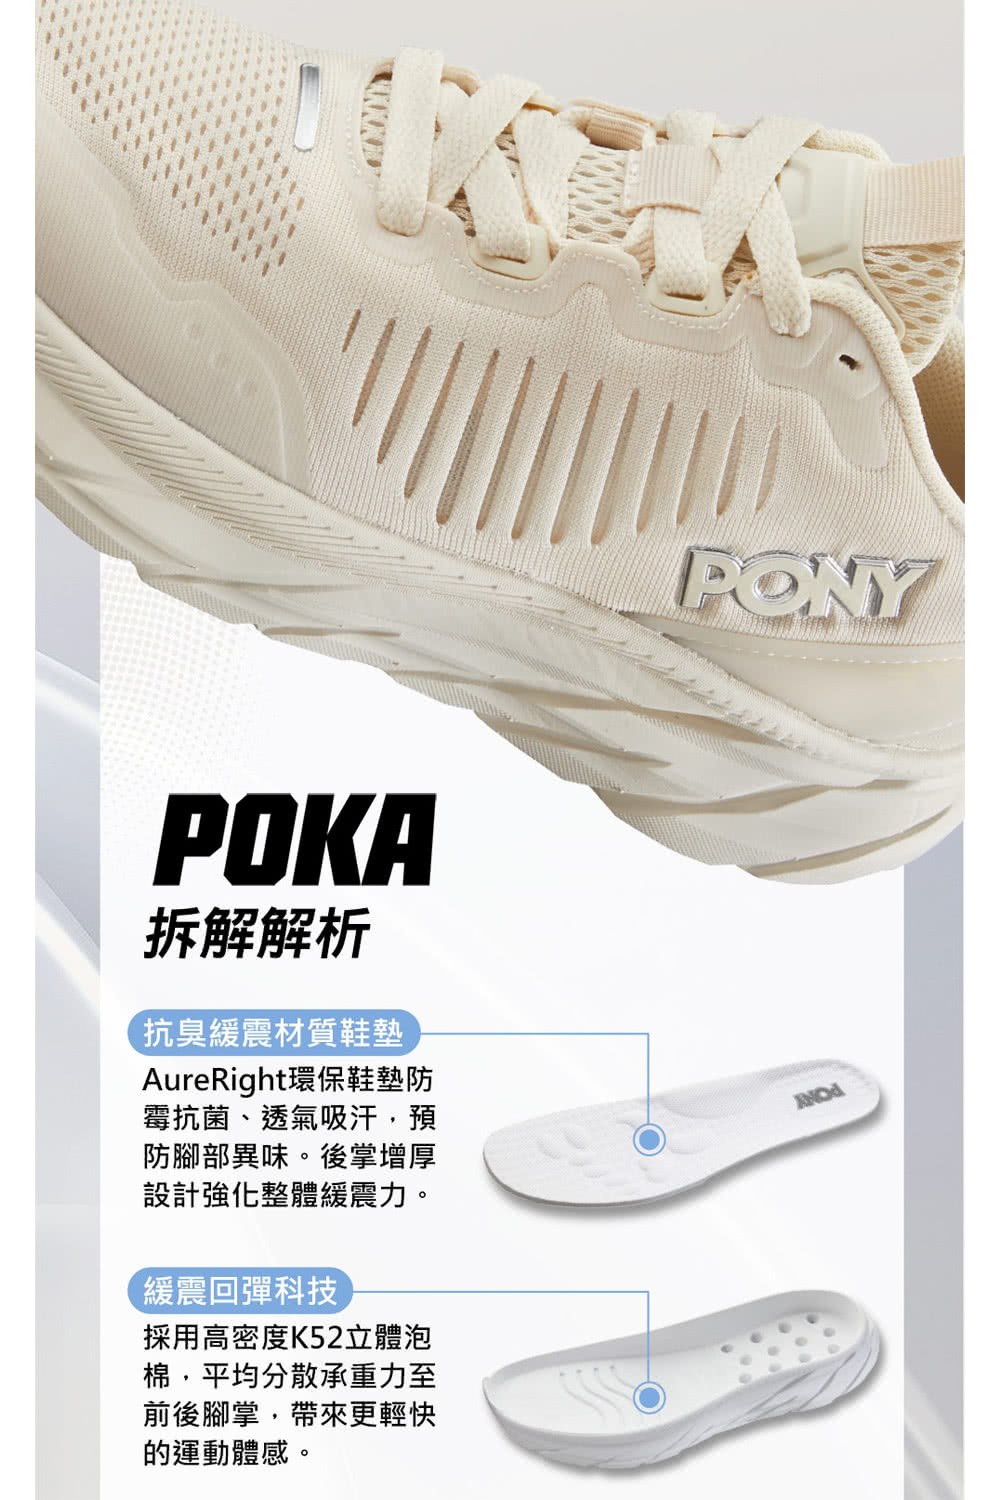 PONY POKA 減震輕量慢跑鞋 中性款-女鞋 男鞋-暗碳